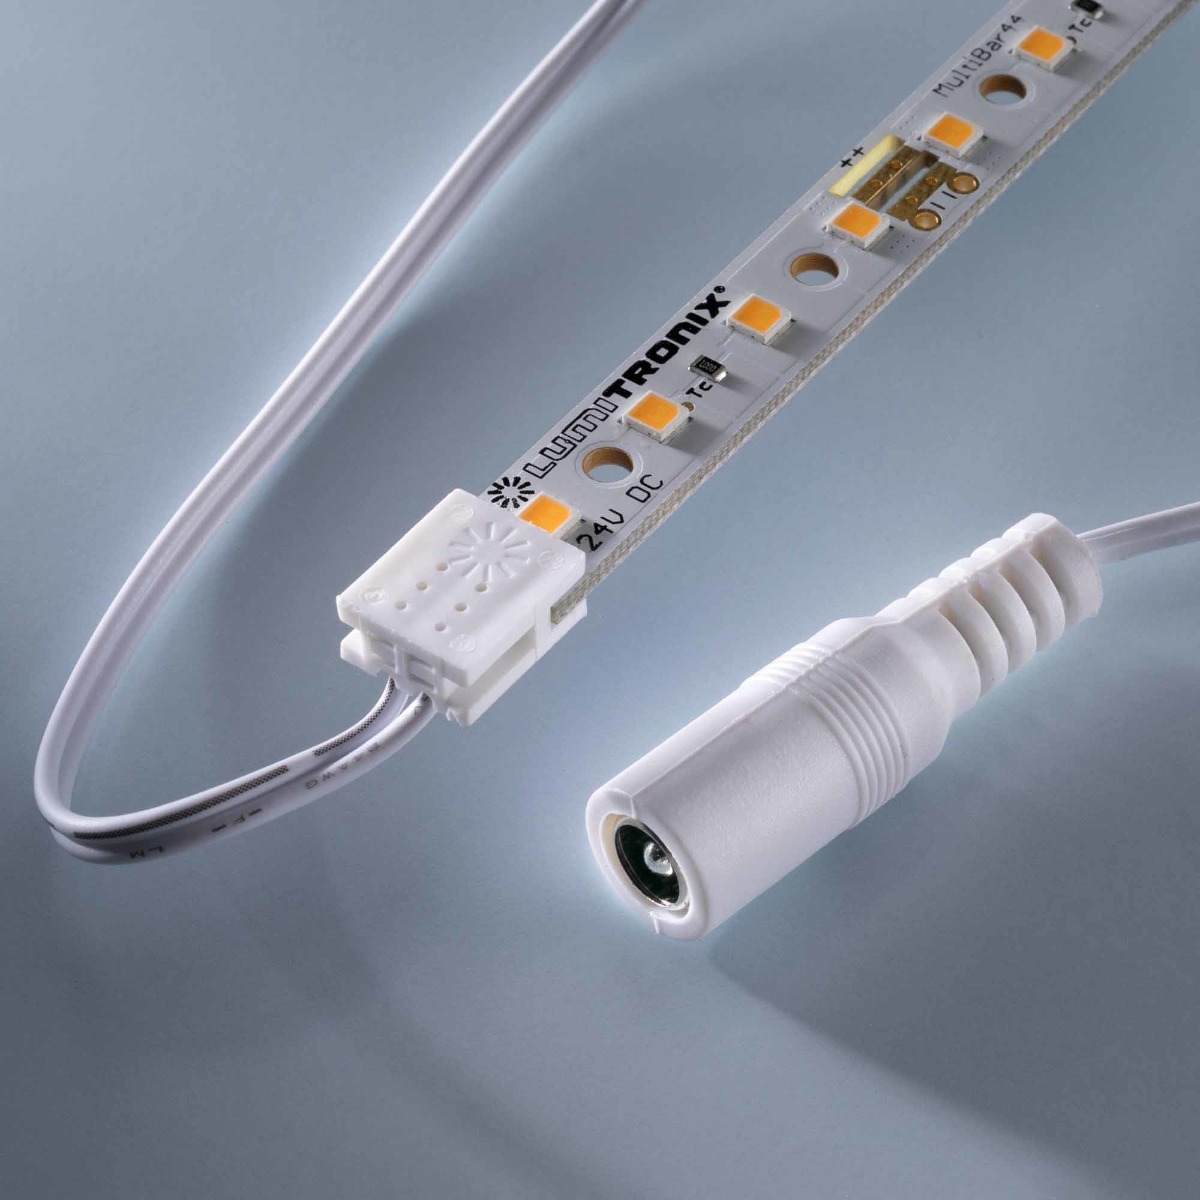 Starter-Set Plug&Play 4 x Multibar3090 Nichia LED Strip bianco caldo CRI90 3000K 732lm 24V 44 LED 50cm con driver e cavi